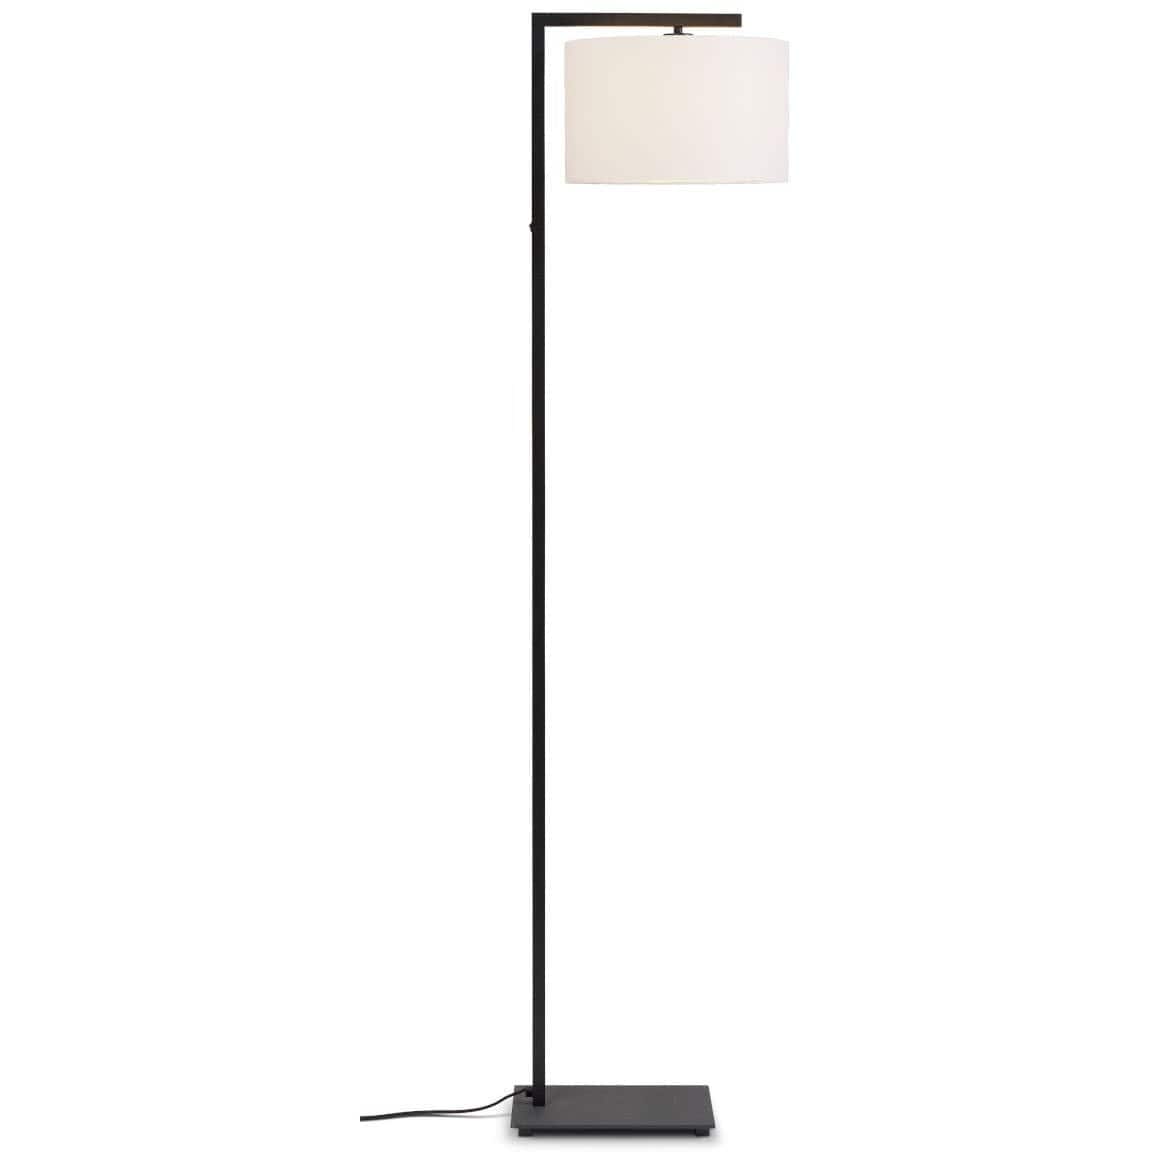 It's About RoMi Floor Lamp Black Finish/White Boston 3220 Floor Lamp, various shade colours